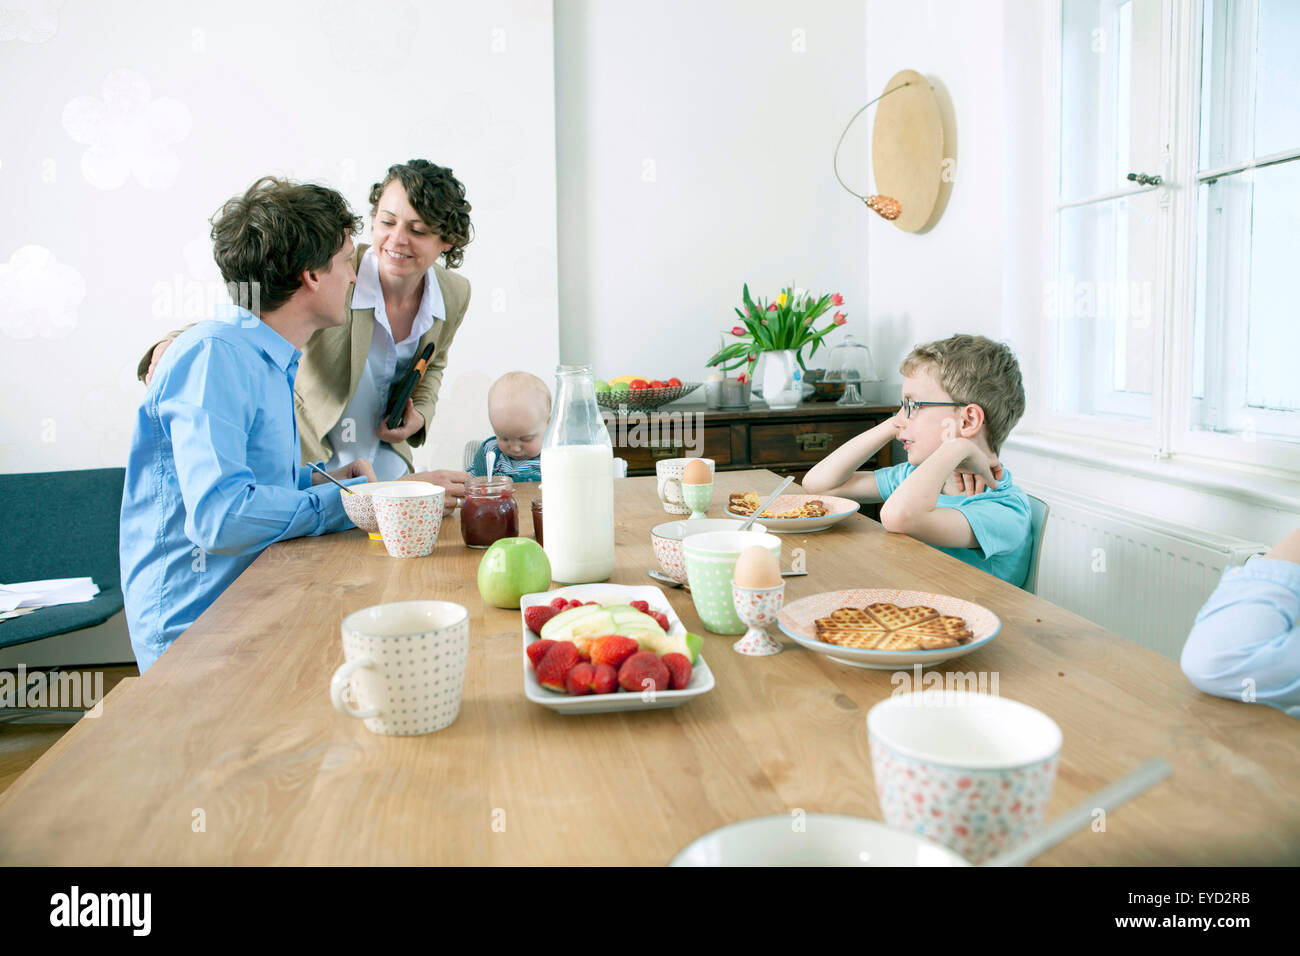 Family with three children having breakfast Stock Photo